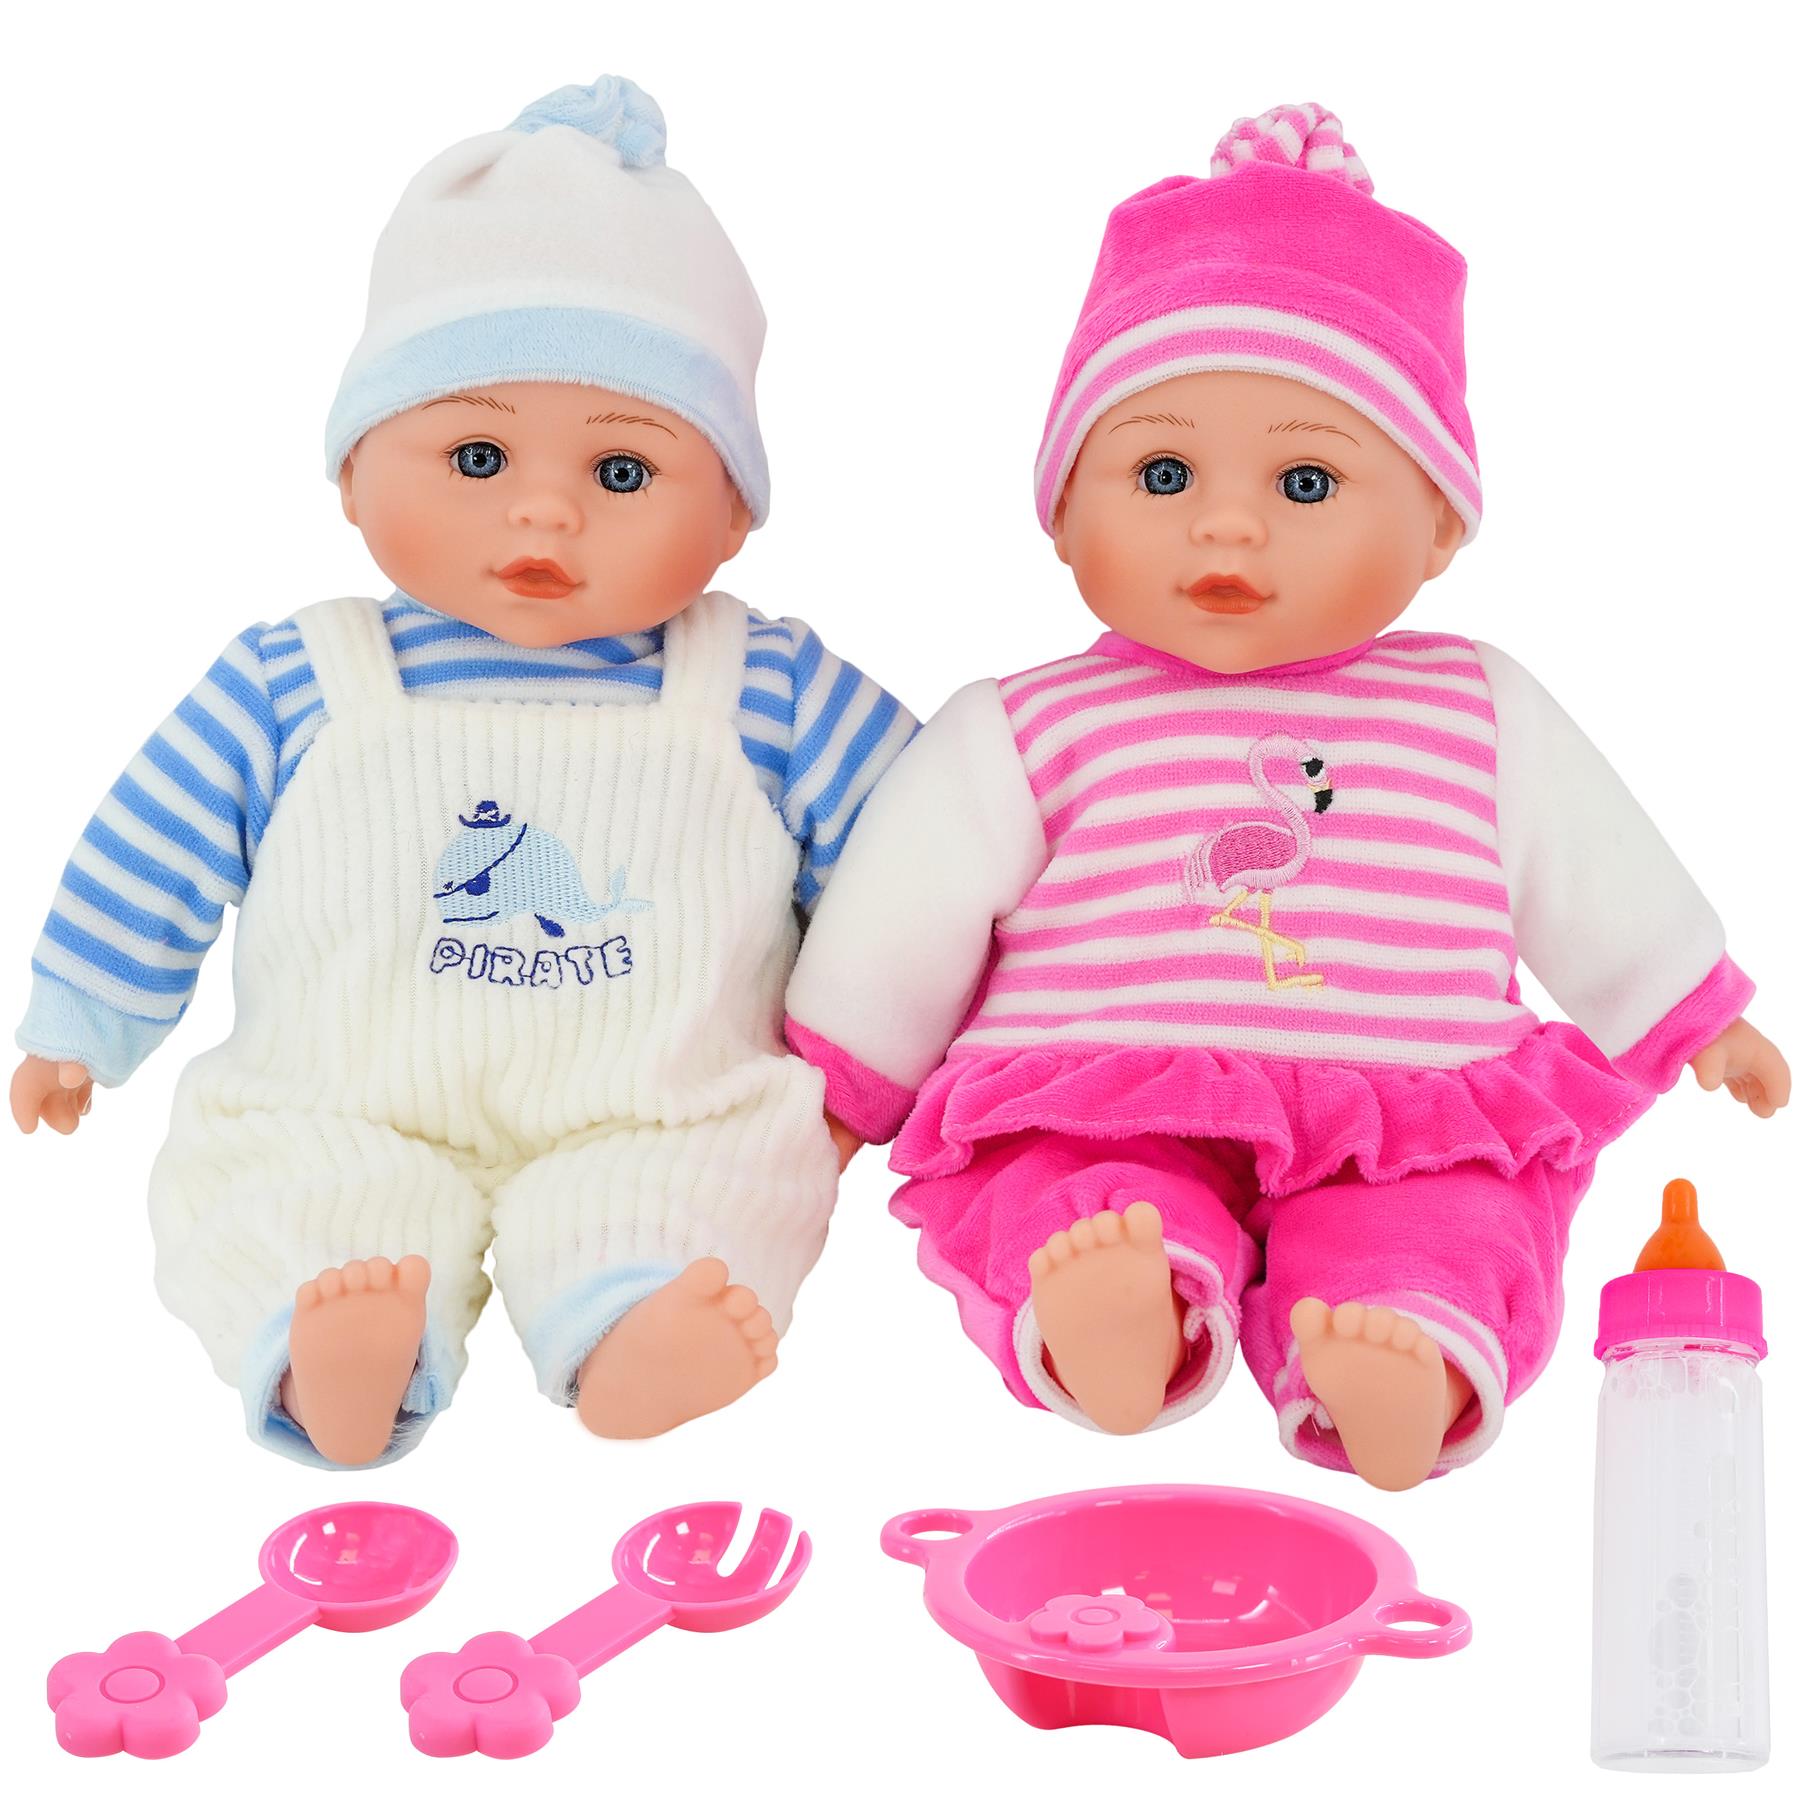 BiBi Twin Baby Dolls & Accessories (33 cm / 13") by BiBi Doll - UKBuyZone